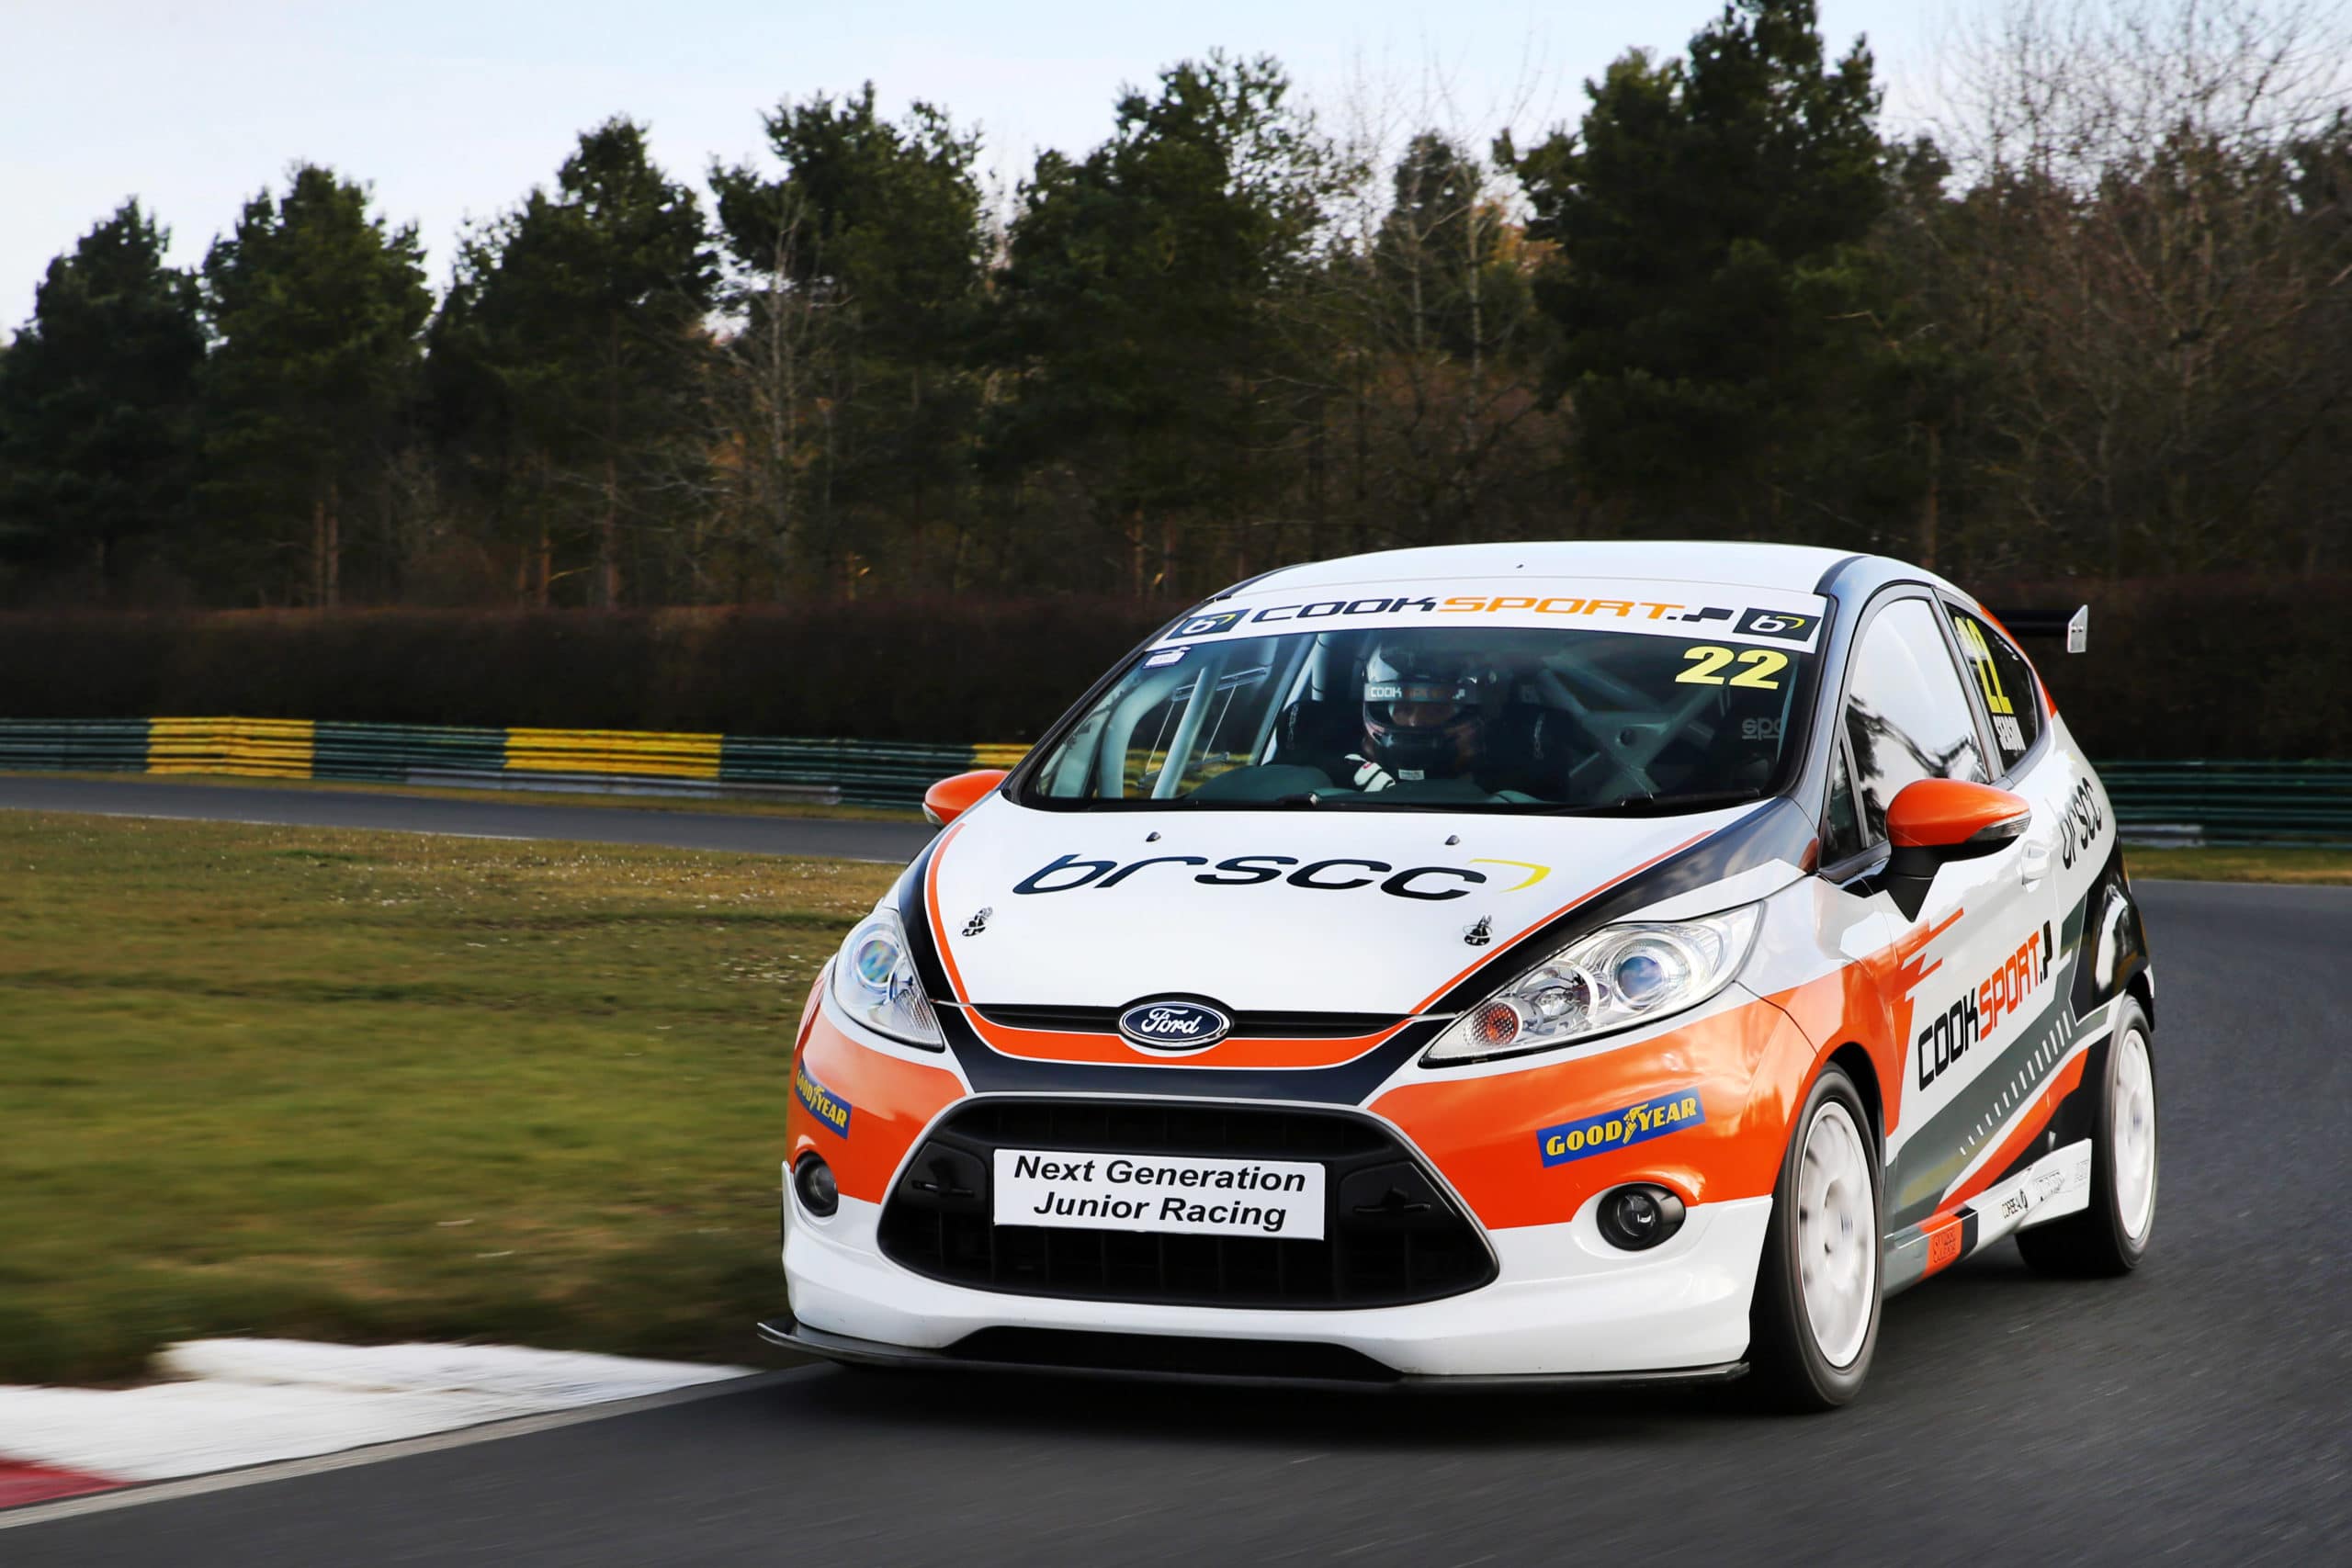 Mintex is supplying the braking power for the BRSCC Fiesta Junior Championship